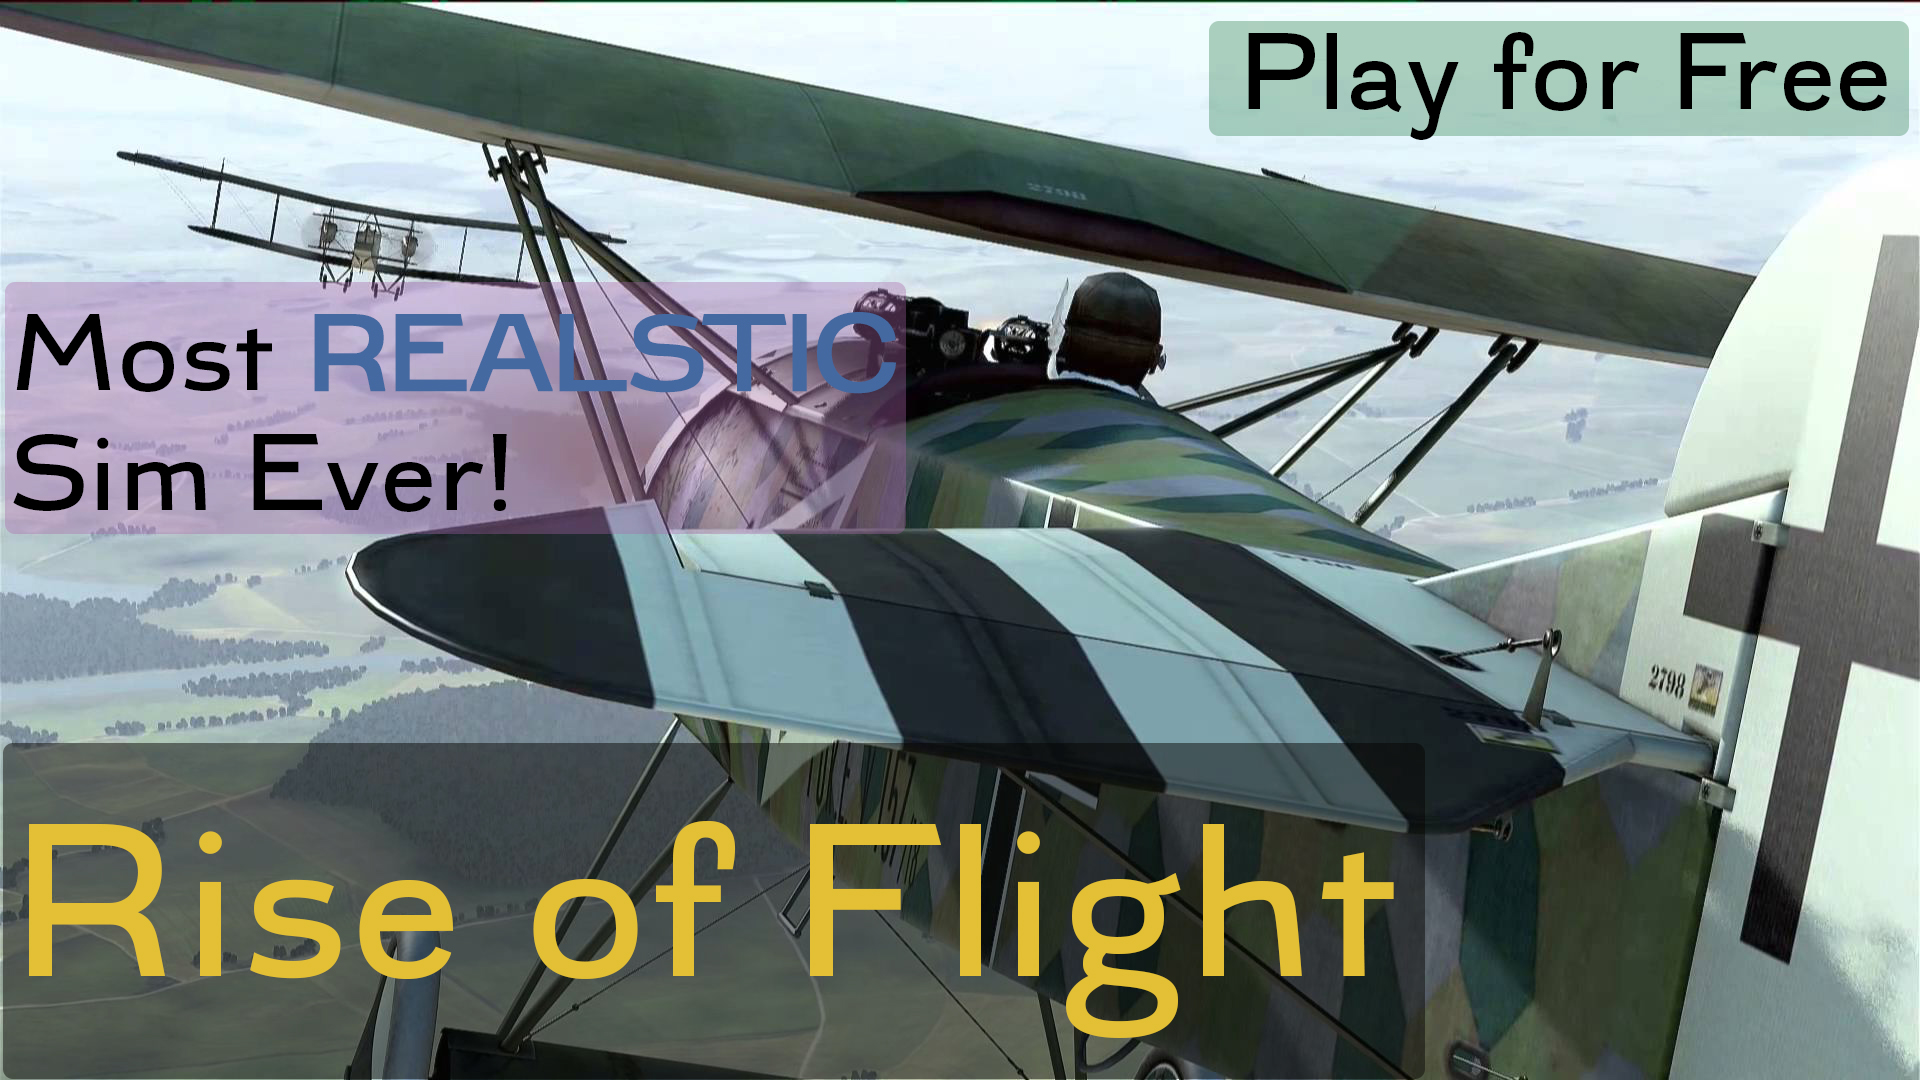 Rise Of Flight